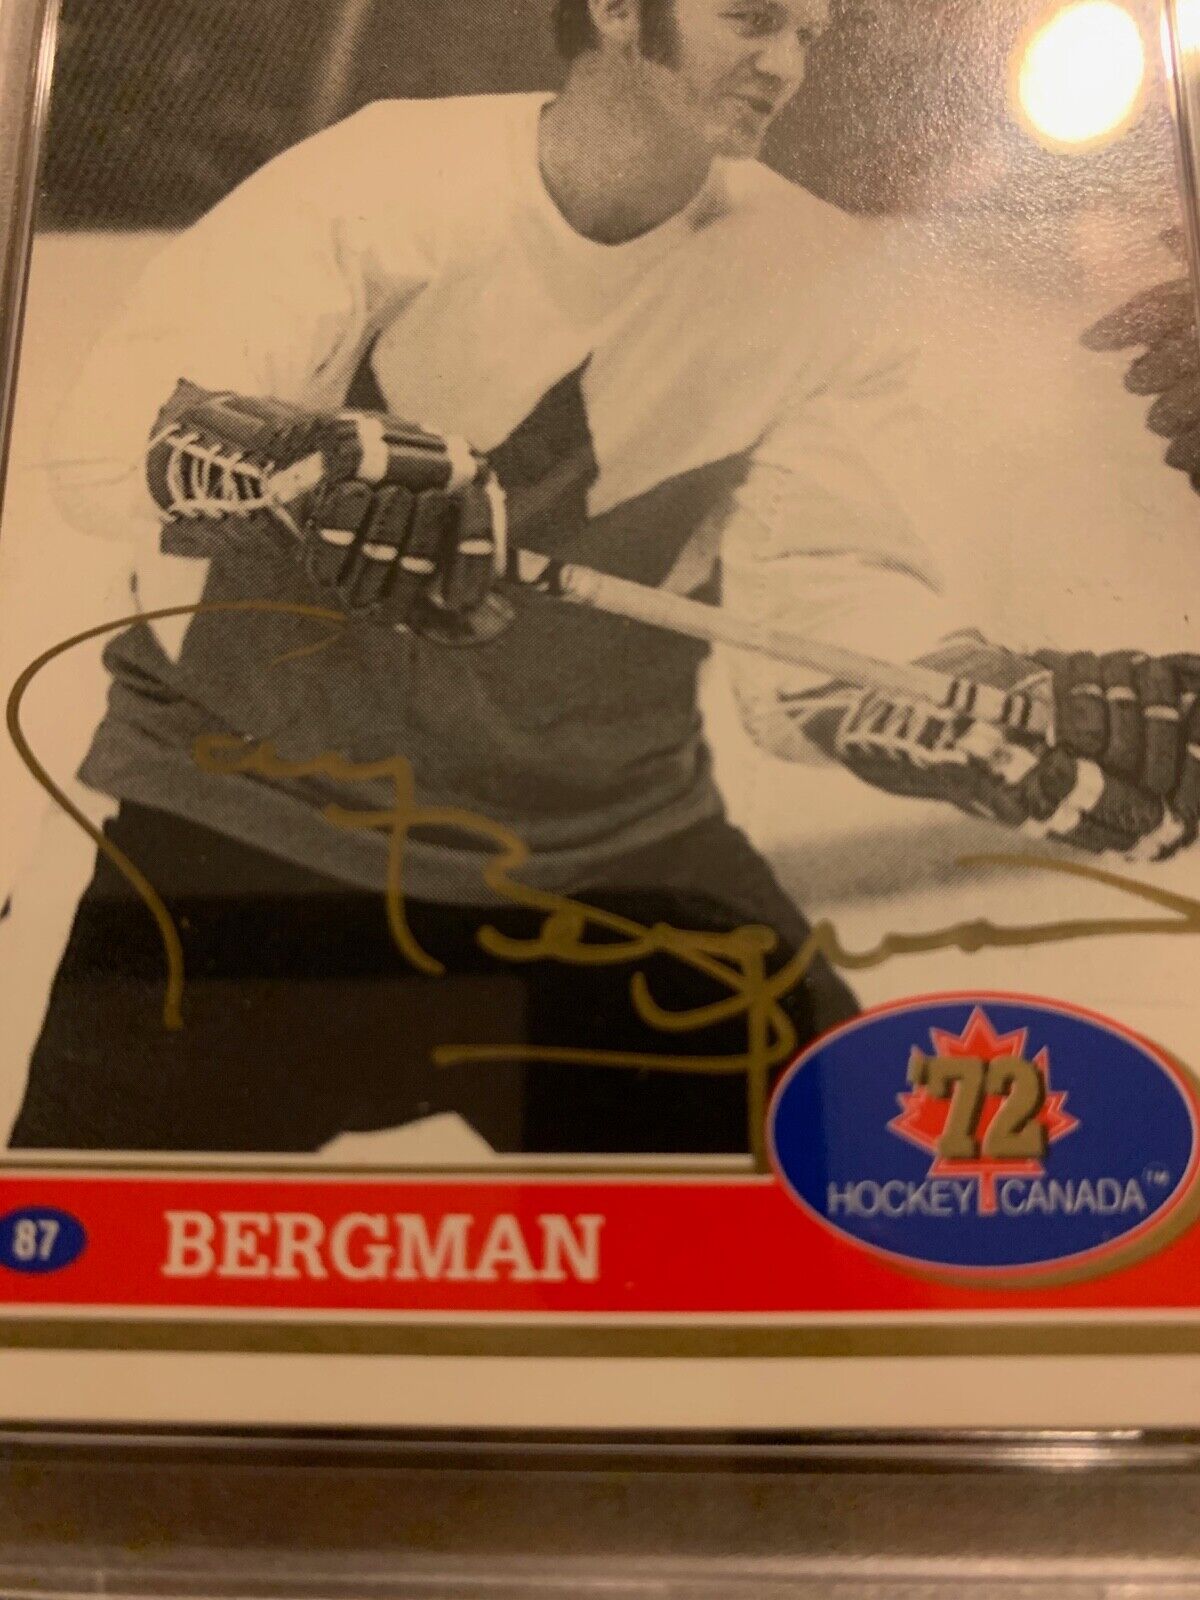 Gary Bergman Autographed 1991 72 Hockey Canada Card PSA Slabbed & Certified